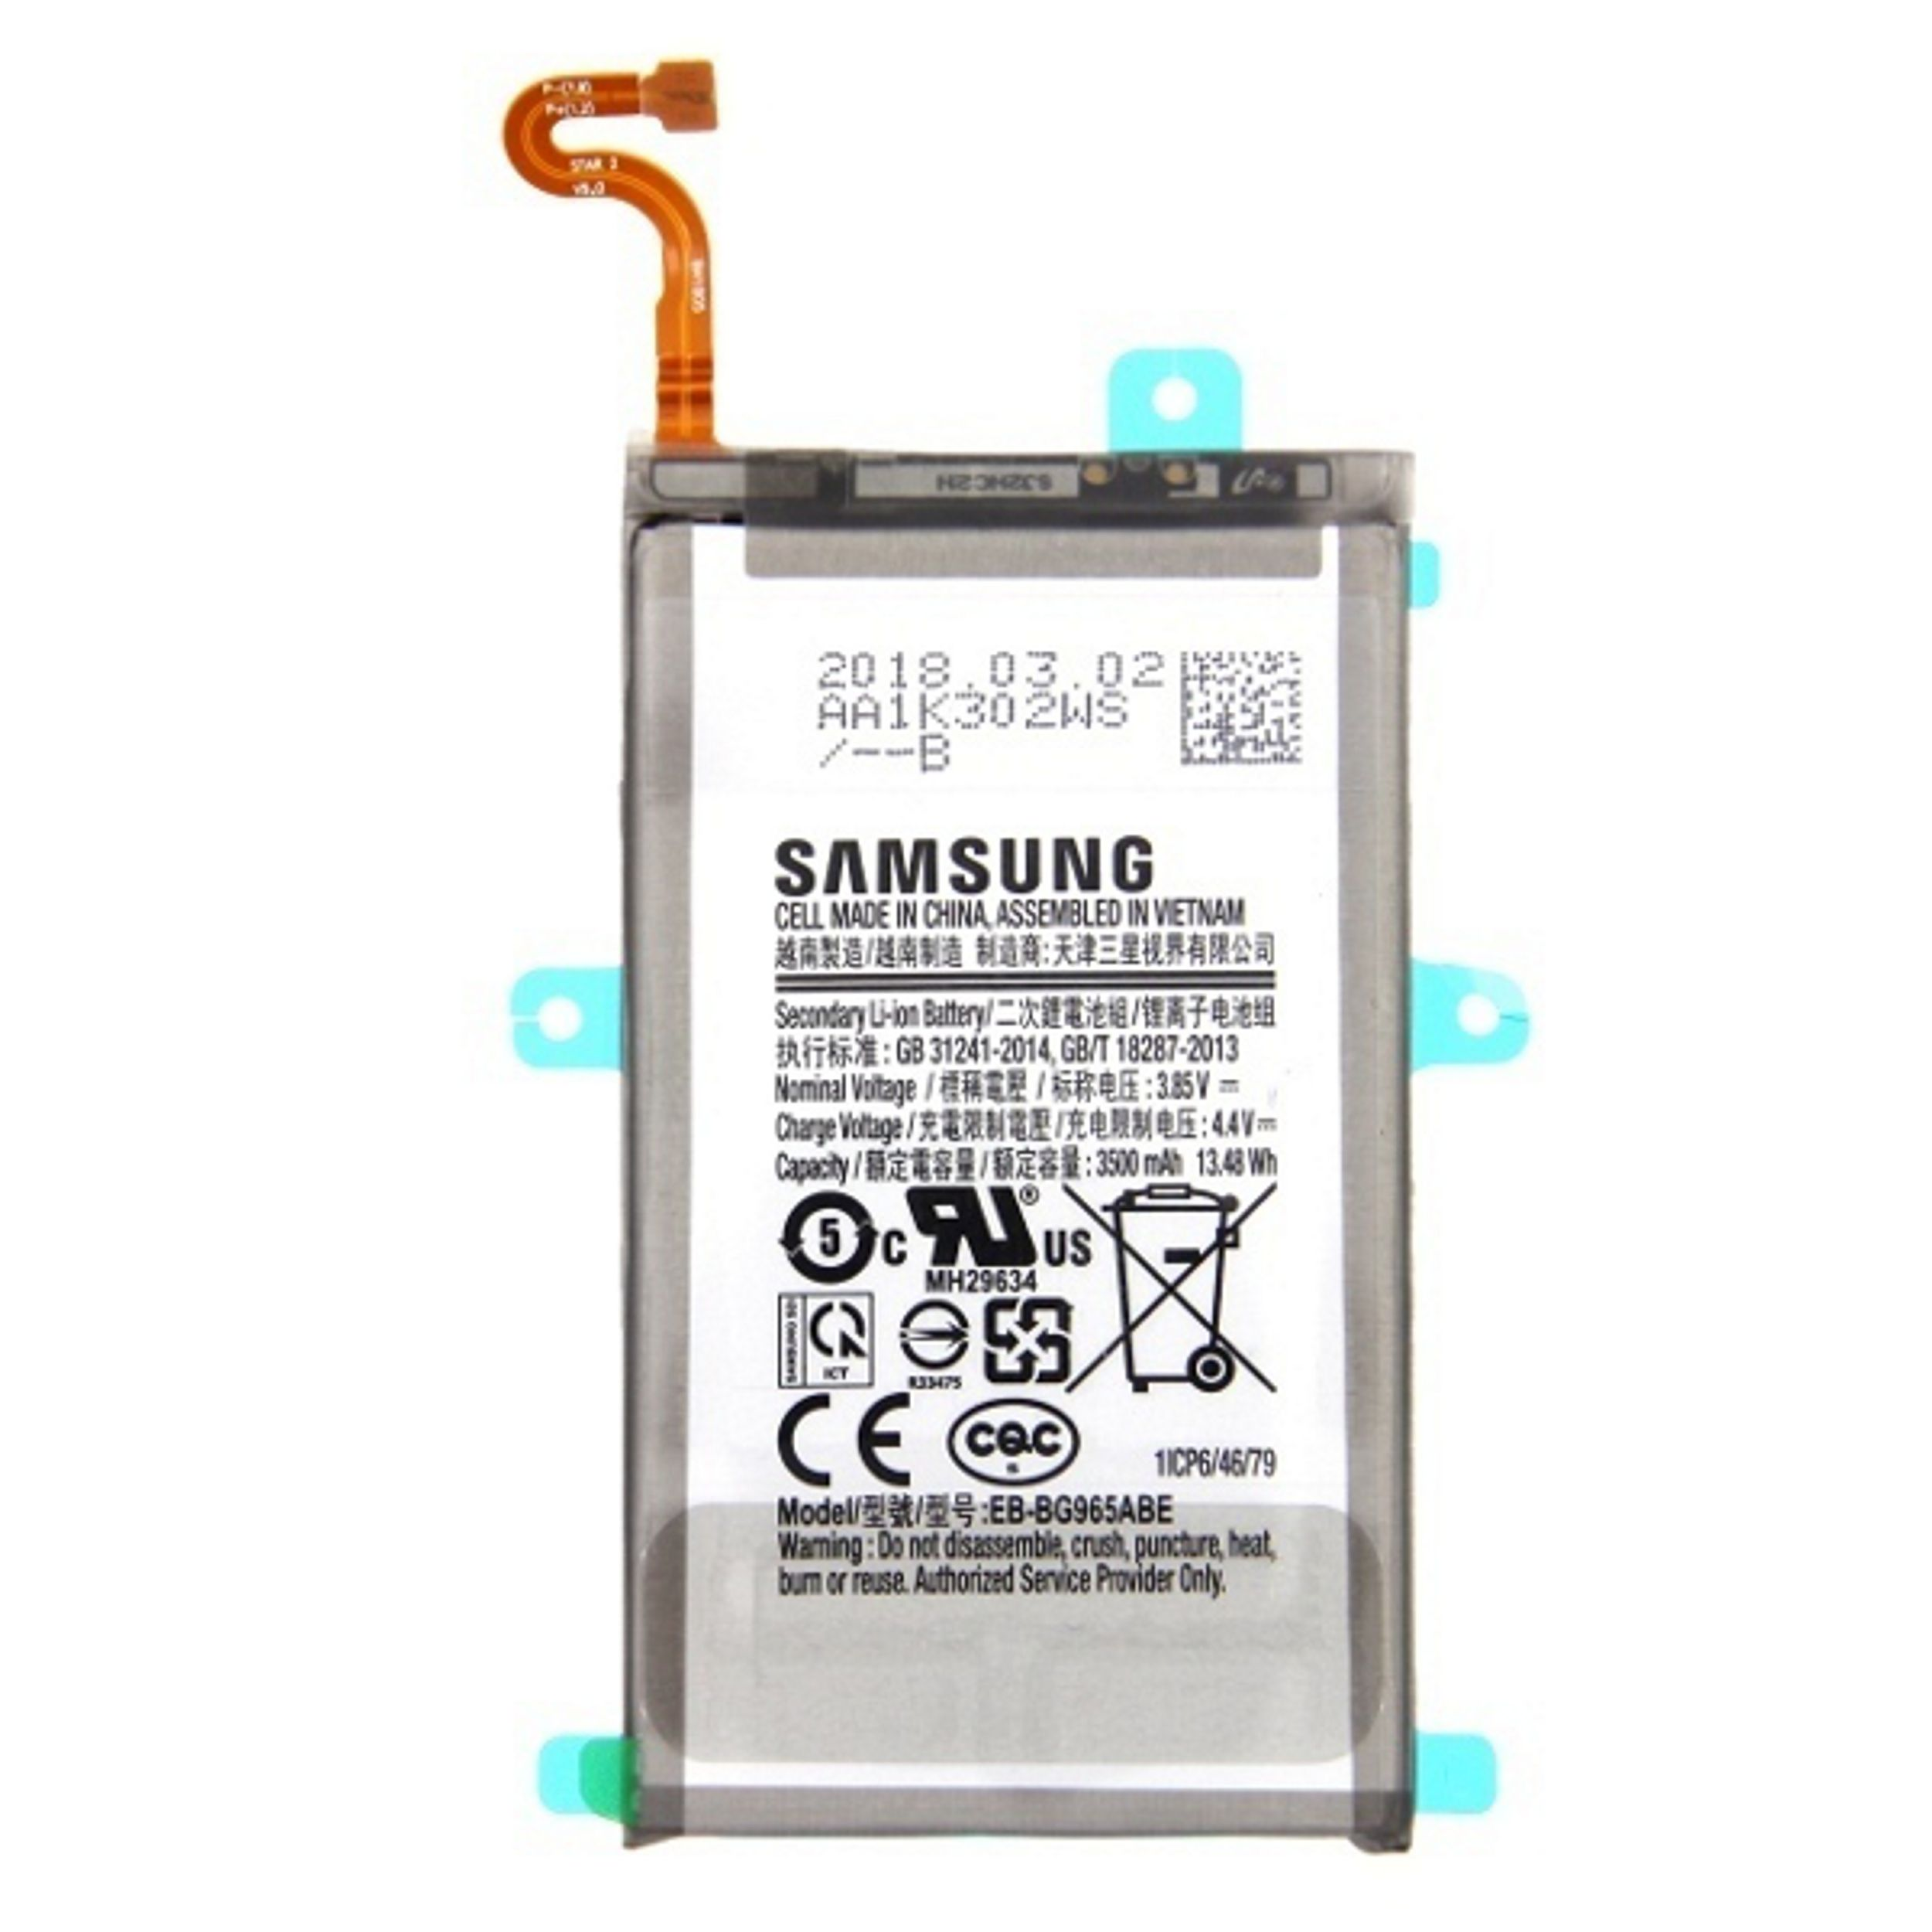 EB-BG965 SAMSUNG für Samsung Original 3500 Volt, Li-Ion 3.85 mAh Li-Ion, Handy-/Smartphoneakku, Akku